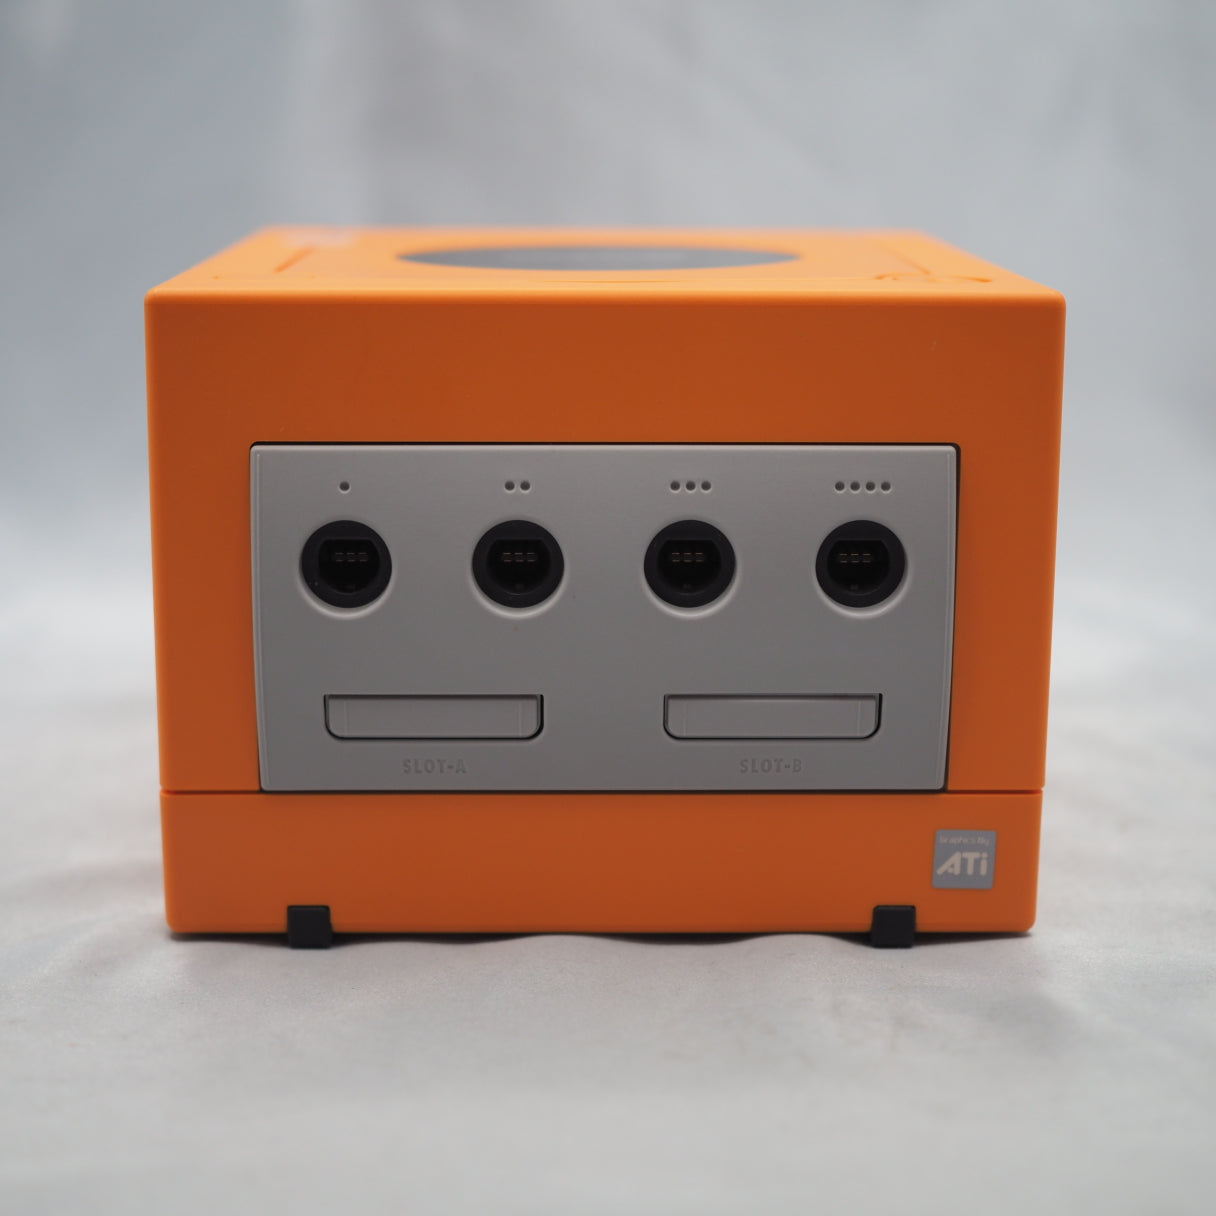 Nintendo GameCube Console System Orange  DOL-001 + Game Boy Player [modified]